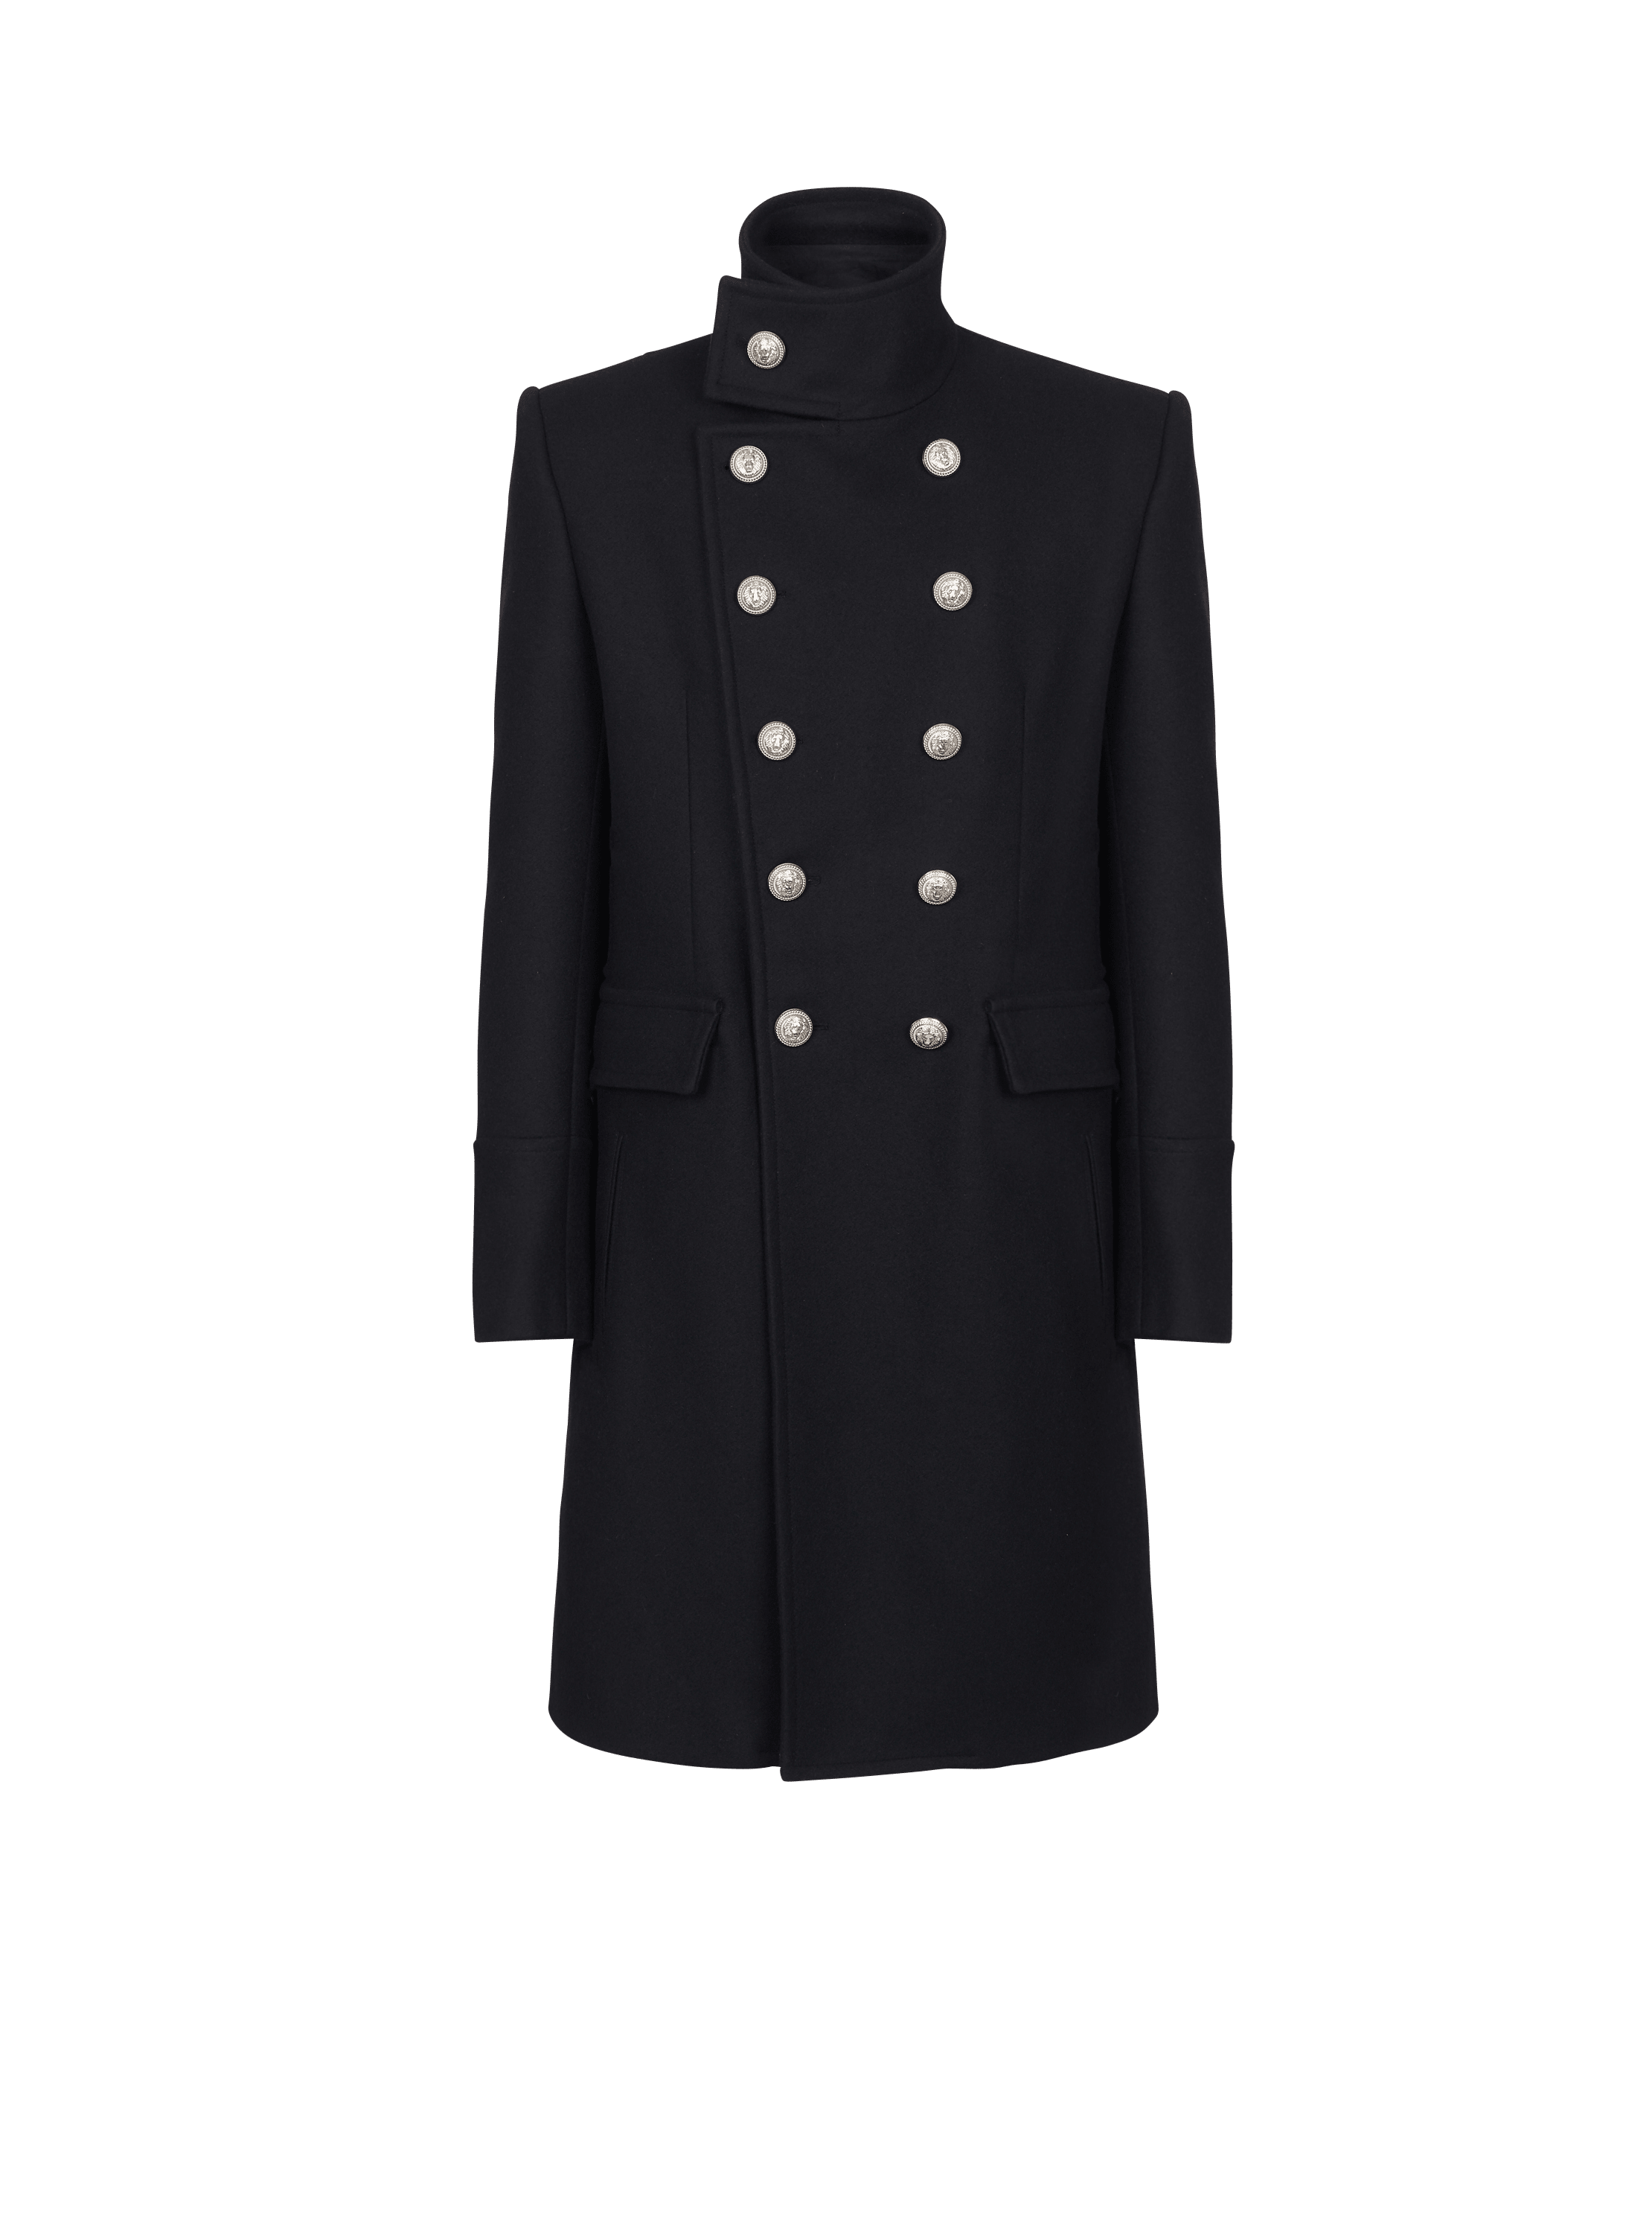 Long wool military style coat, black, hi-res